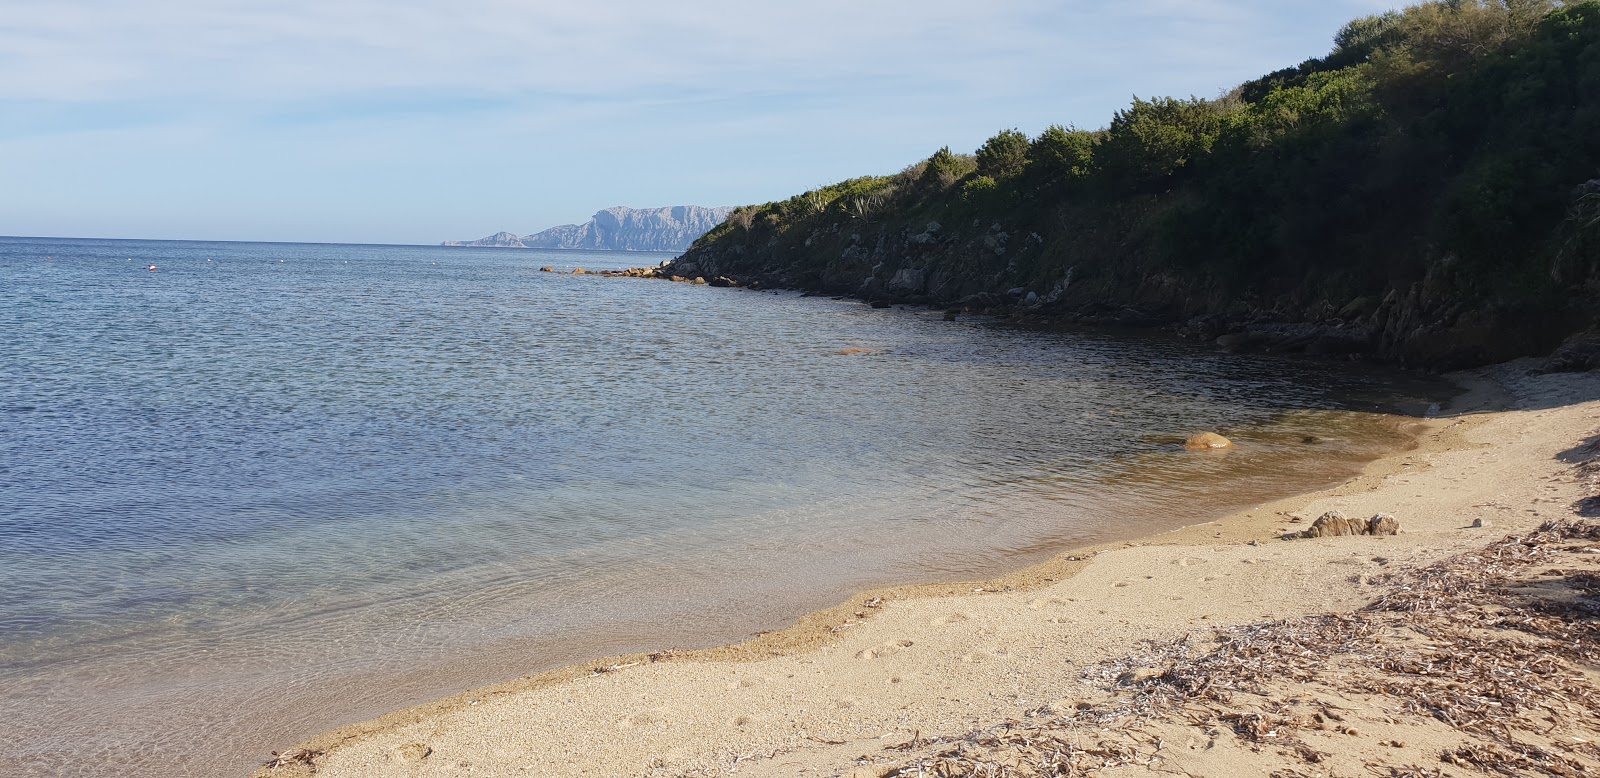 Photo de Spiaggia S'abba e sa Pedra avec l'eau cristalline de surface